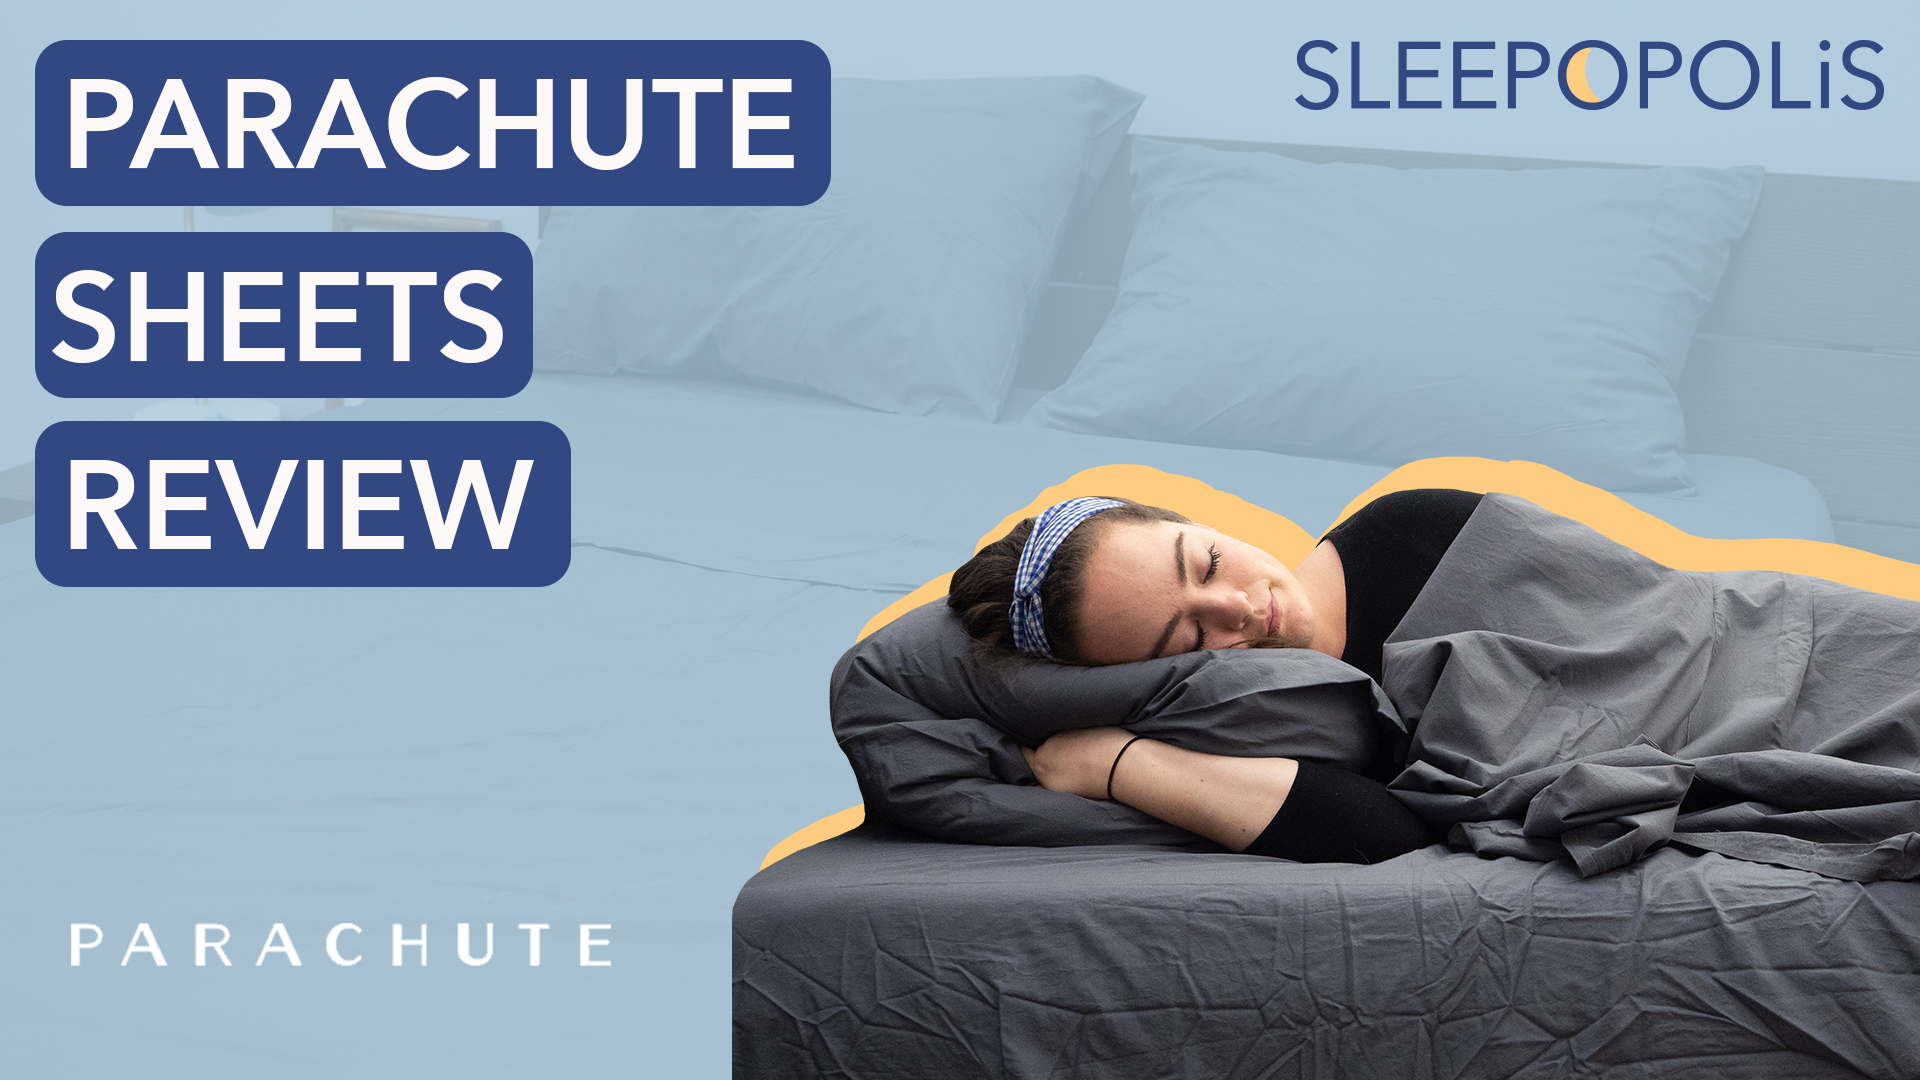 Parachute Sheets Review - Best/Worst Qualities | Sleepopolis